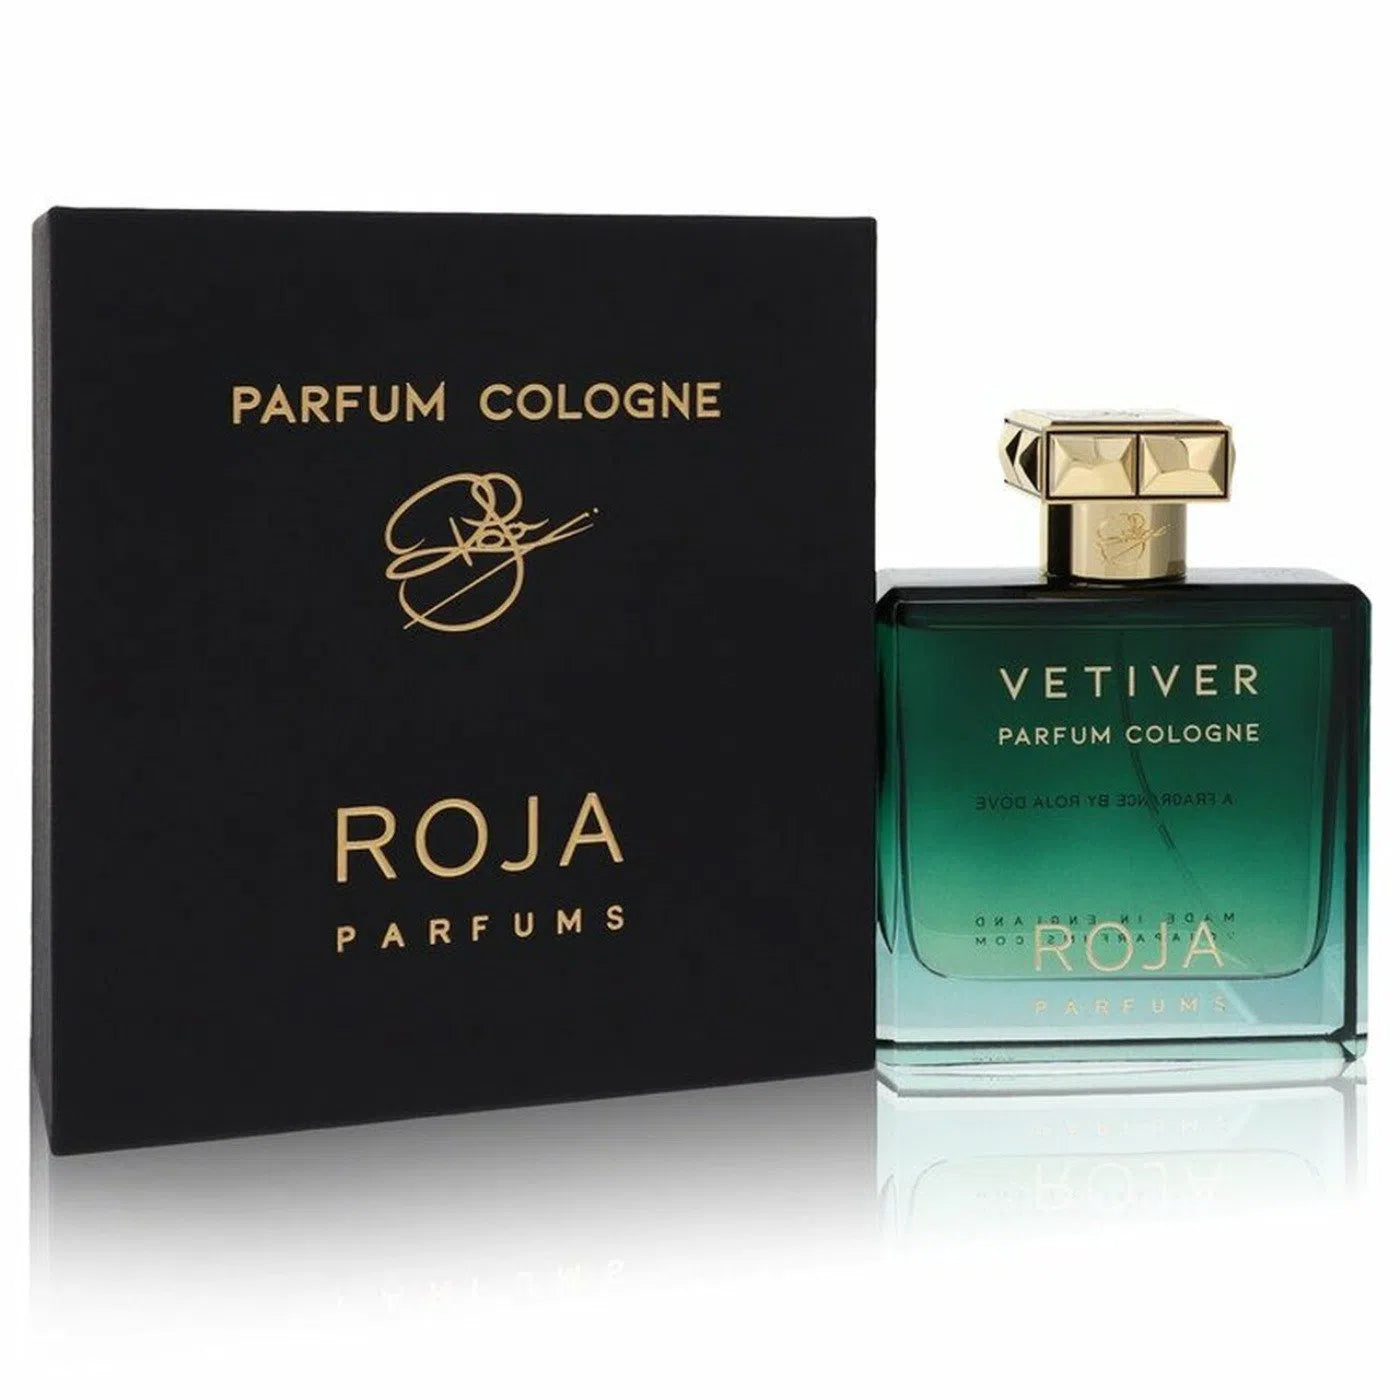 Perfume Roja Parfums Vetiver Parfum Cologne (M) / 100 ml - 5060370917013- Prive Perfumes Honduras